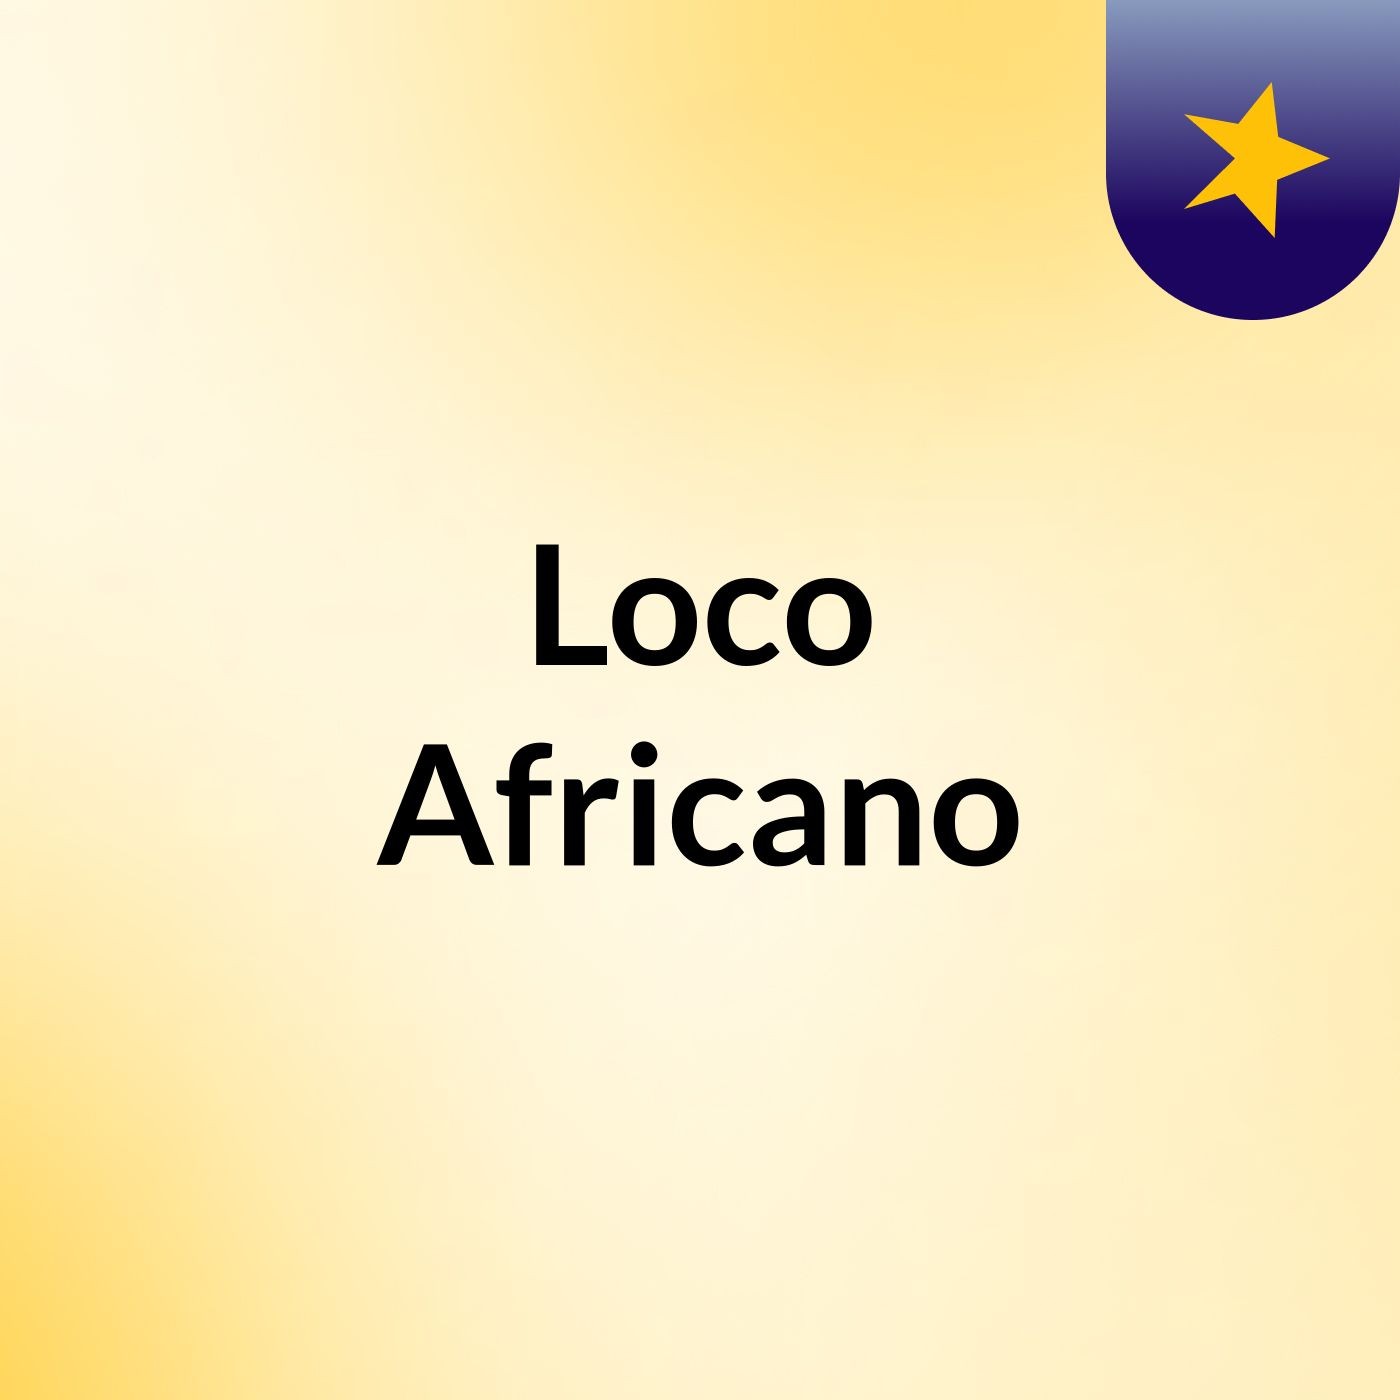 Loco Africano